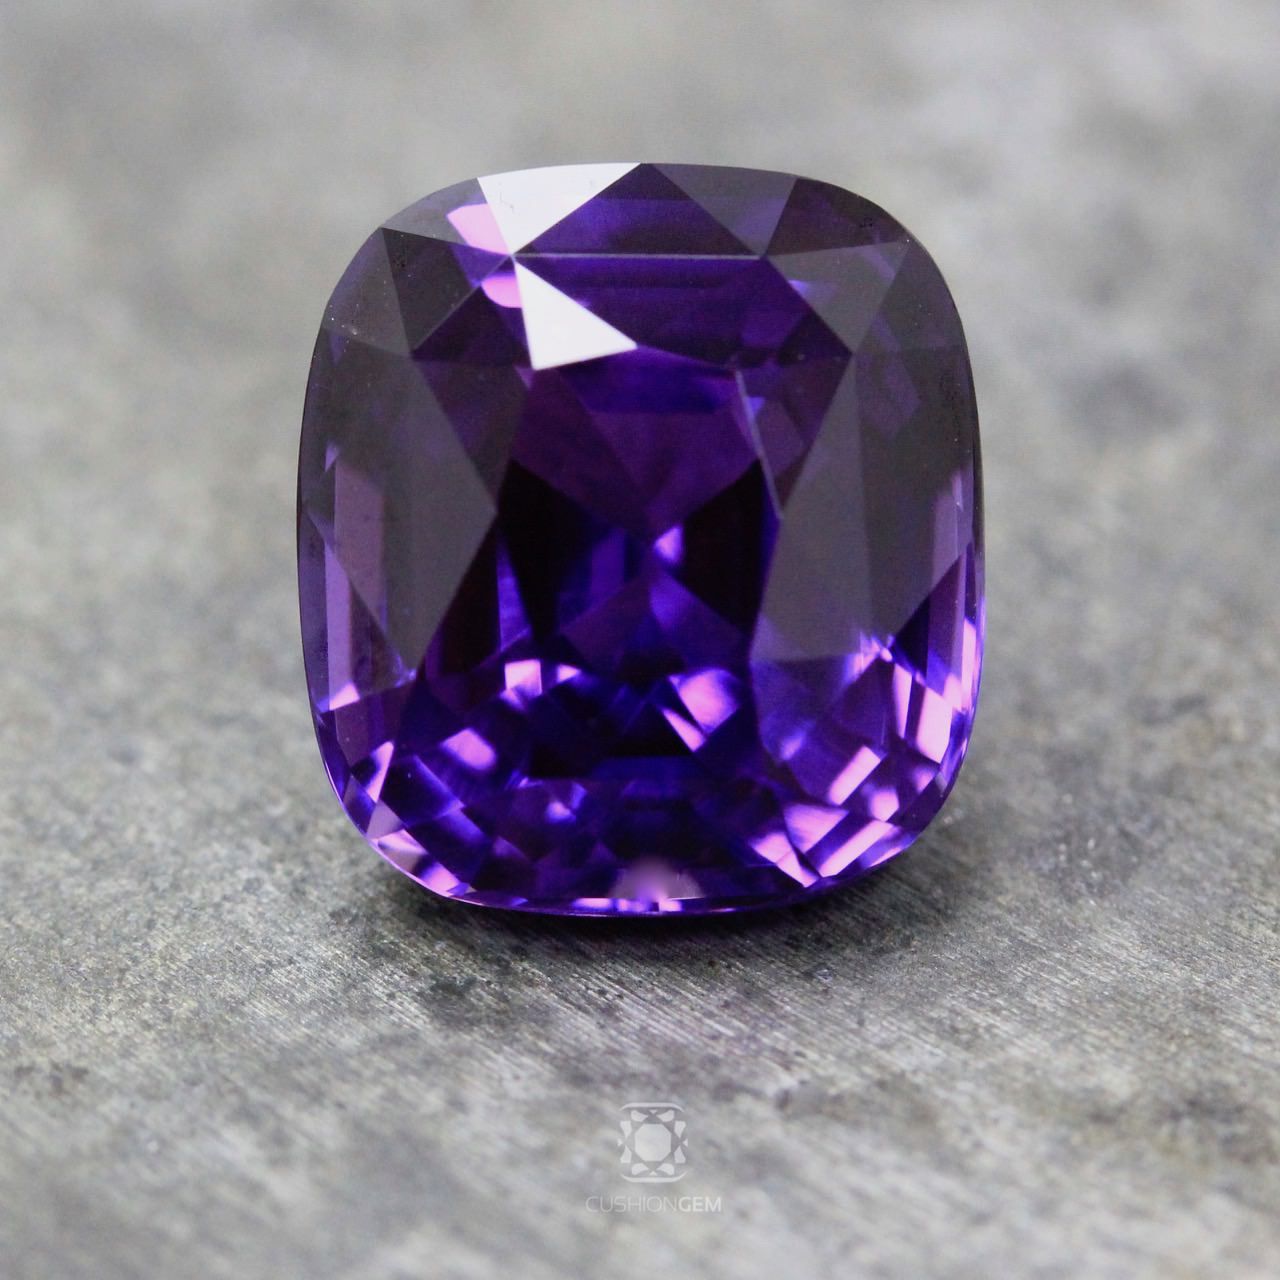 A magnificent cushion purple sapphire